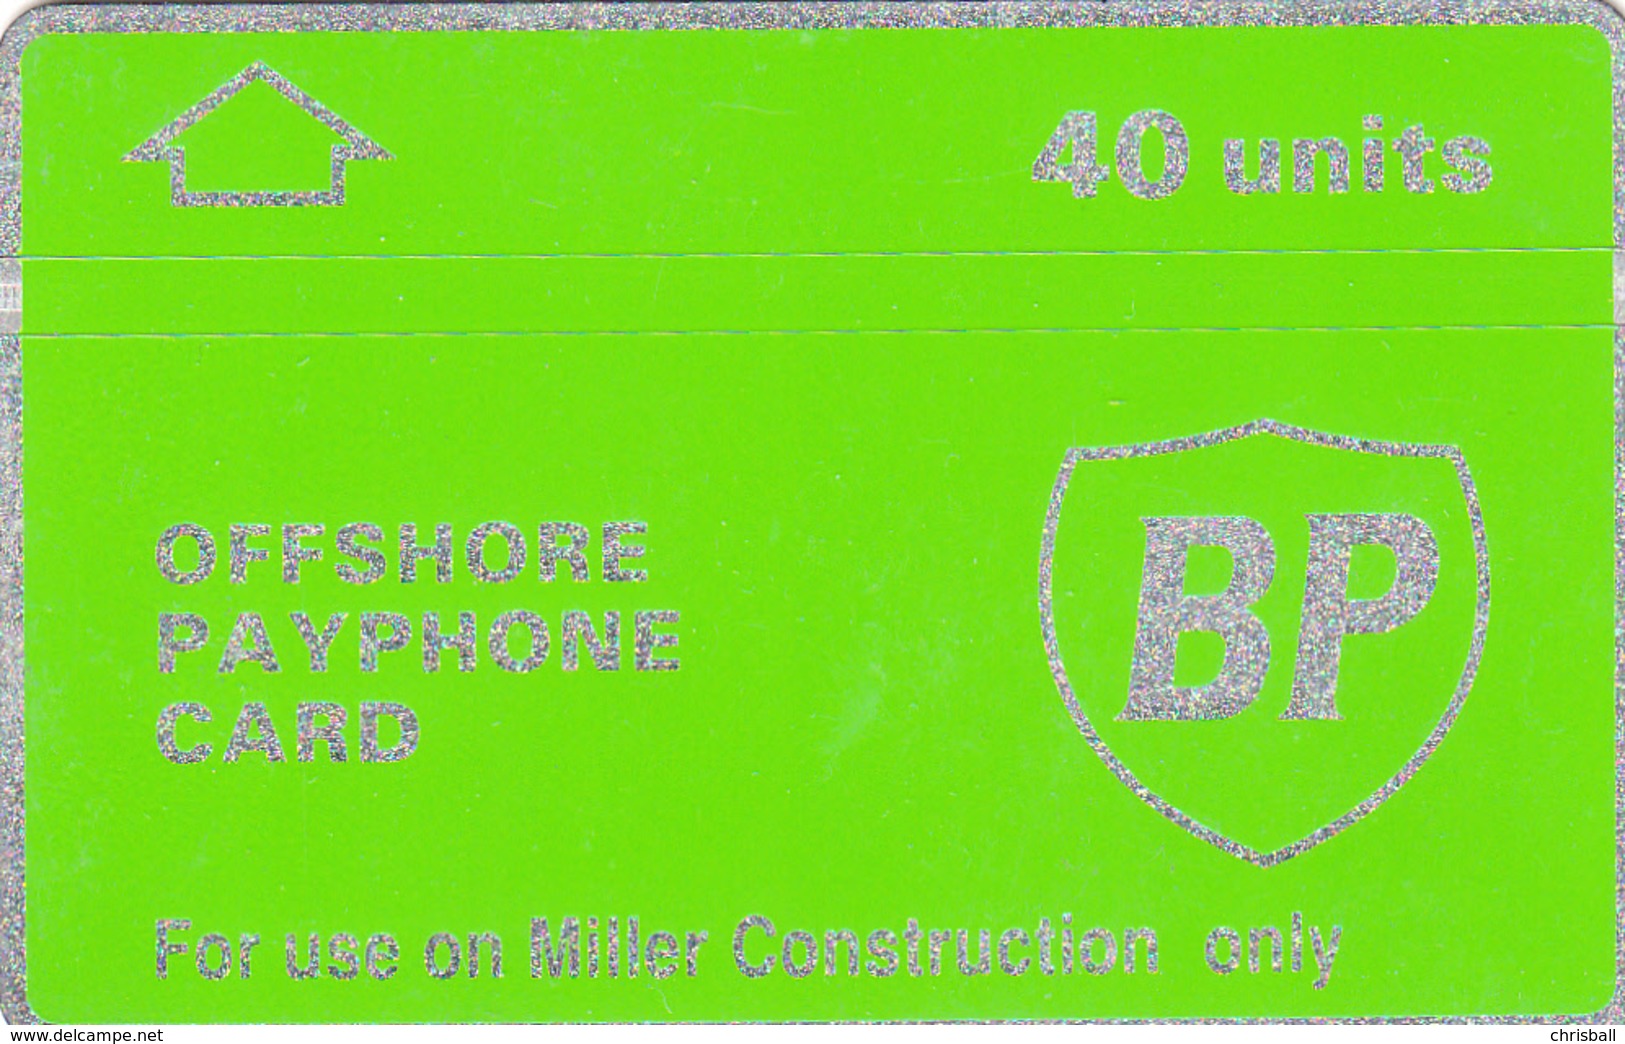 BT Oil Rig Phonecard - British Petroleum 40unit (Miller Construction Only) - Superb Fine Used Condition - [ 2] Plataformas Petroleras